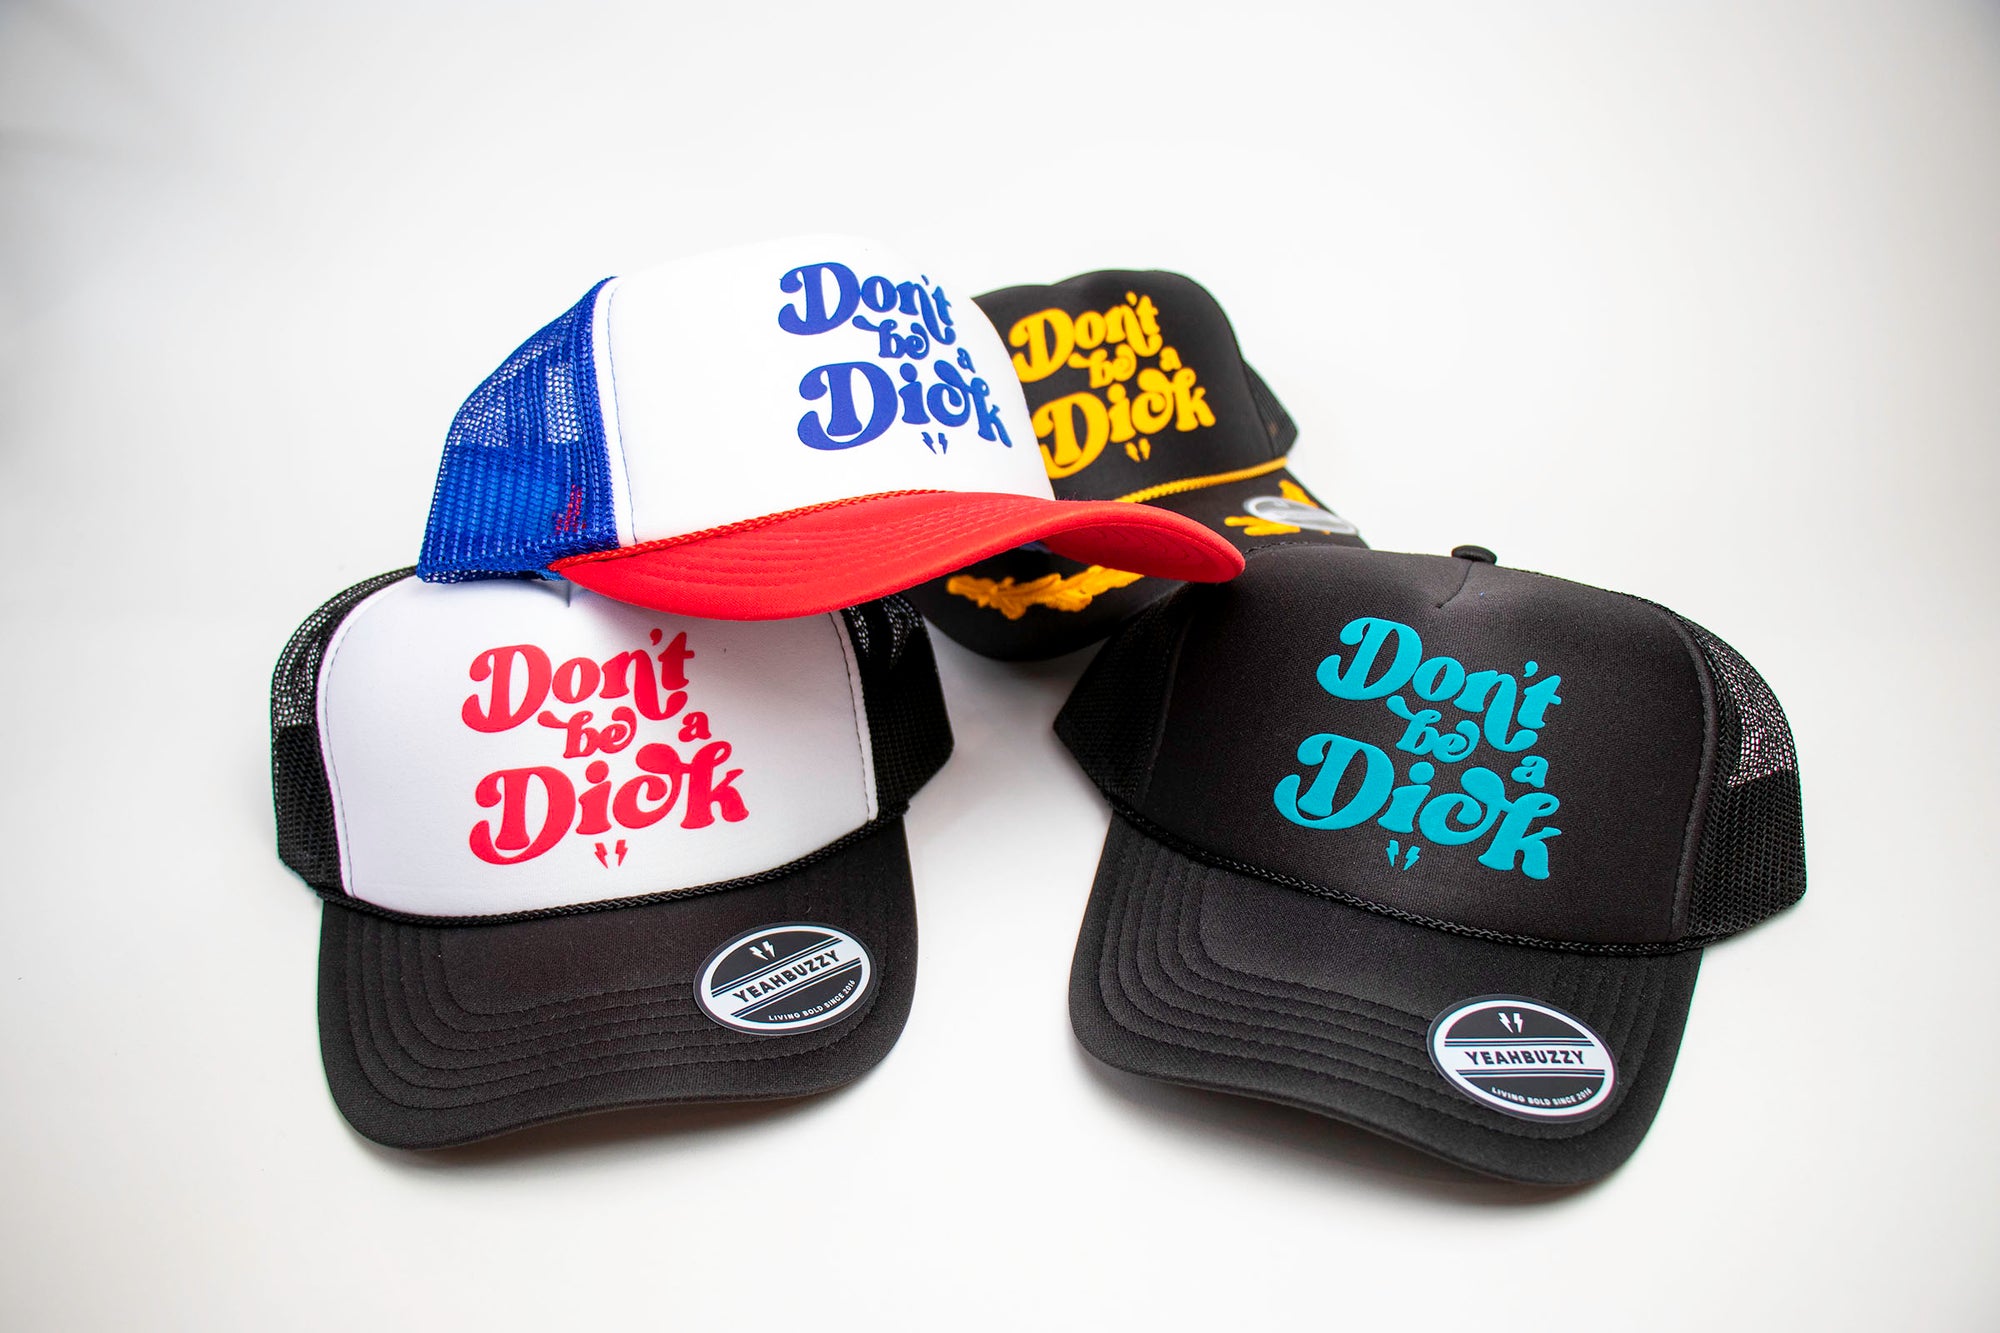 Don&#39;t be a Dick- Foam Trucker Cap (Gold/Black)